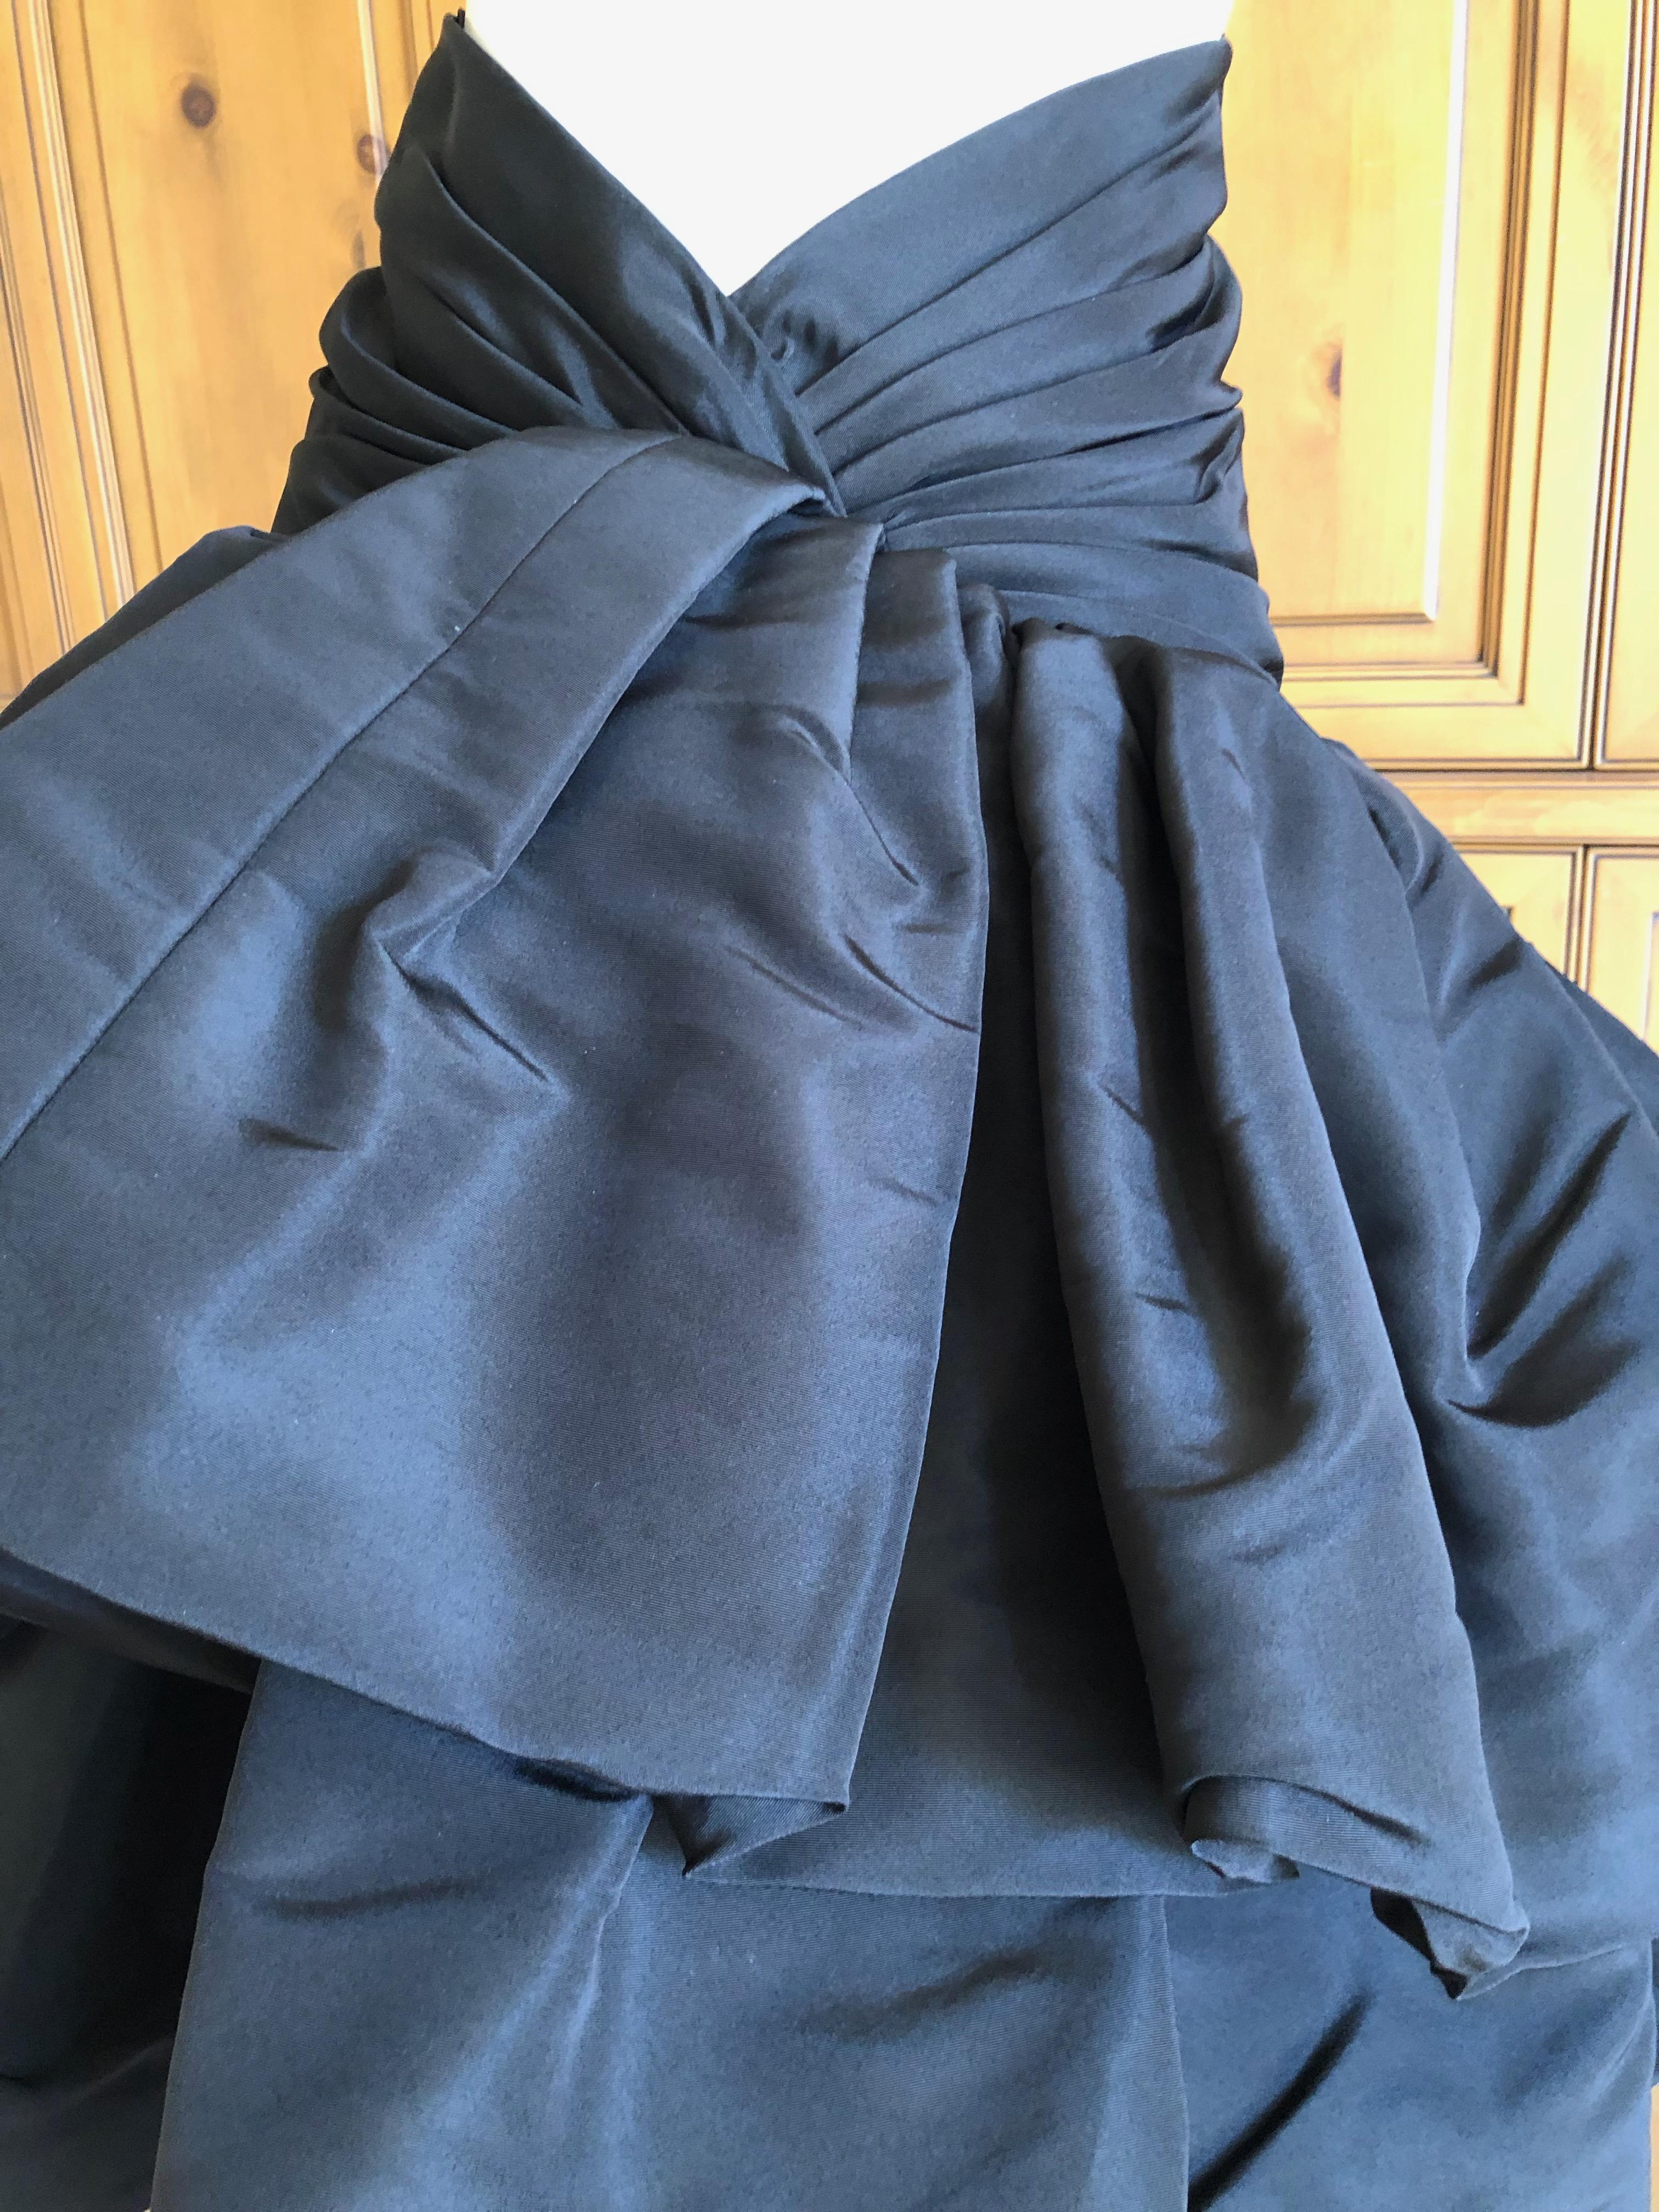 Oscar de la Renta Dramatic Vintage Black Silk Taffeta Ball Skirt 
Marked size 4, but more like 0-2
Waist 24